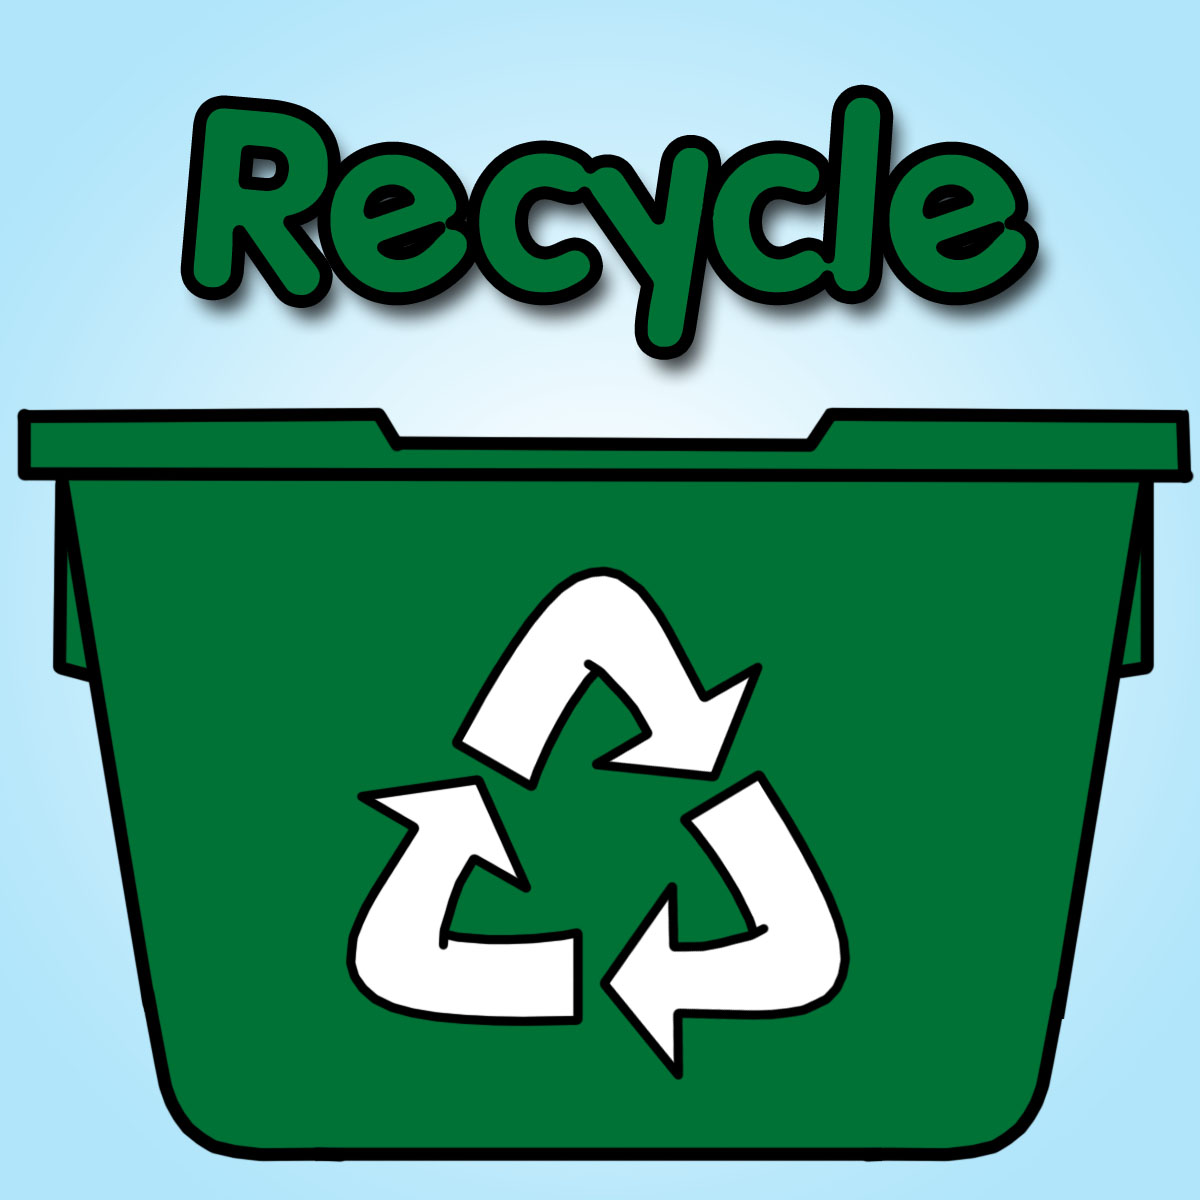 Recycle symbols clip art free 2